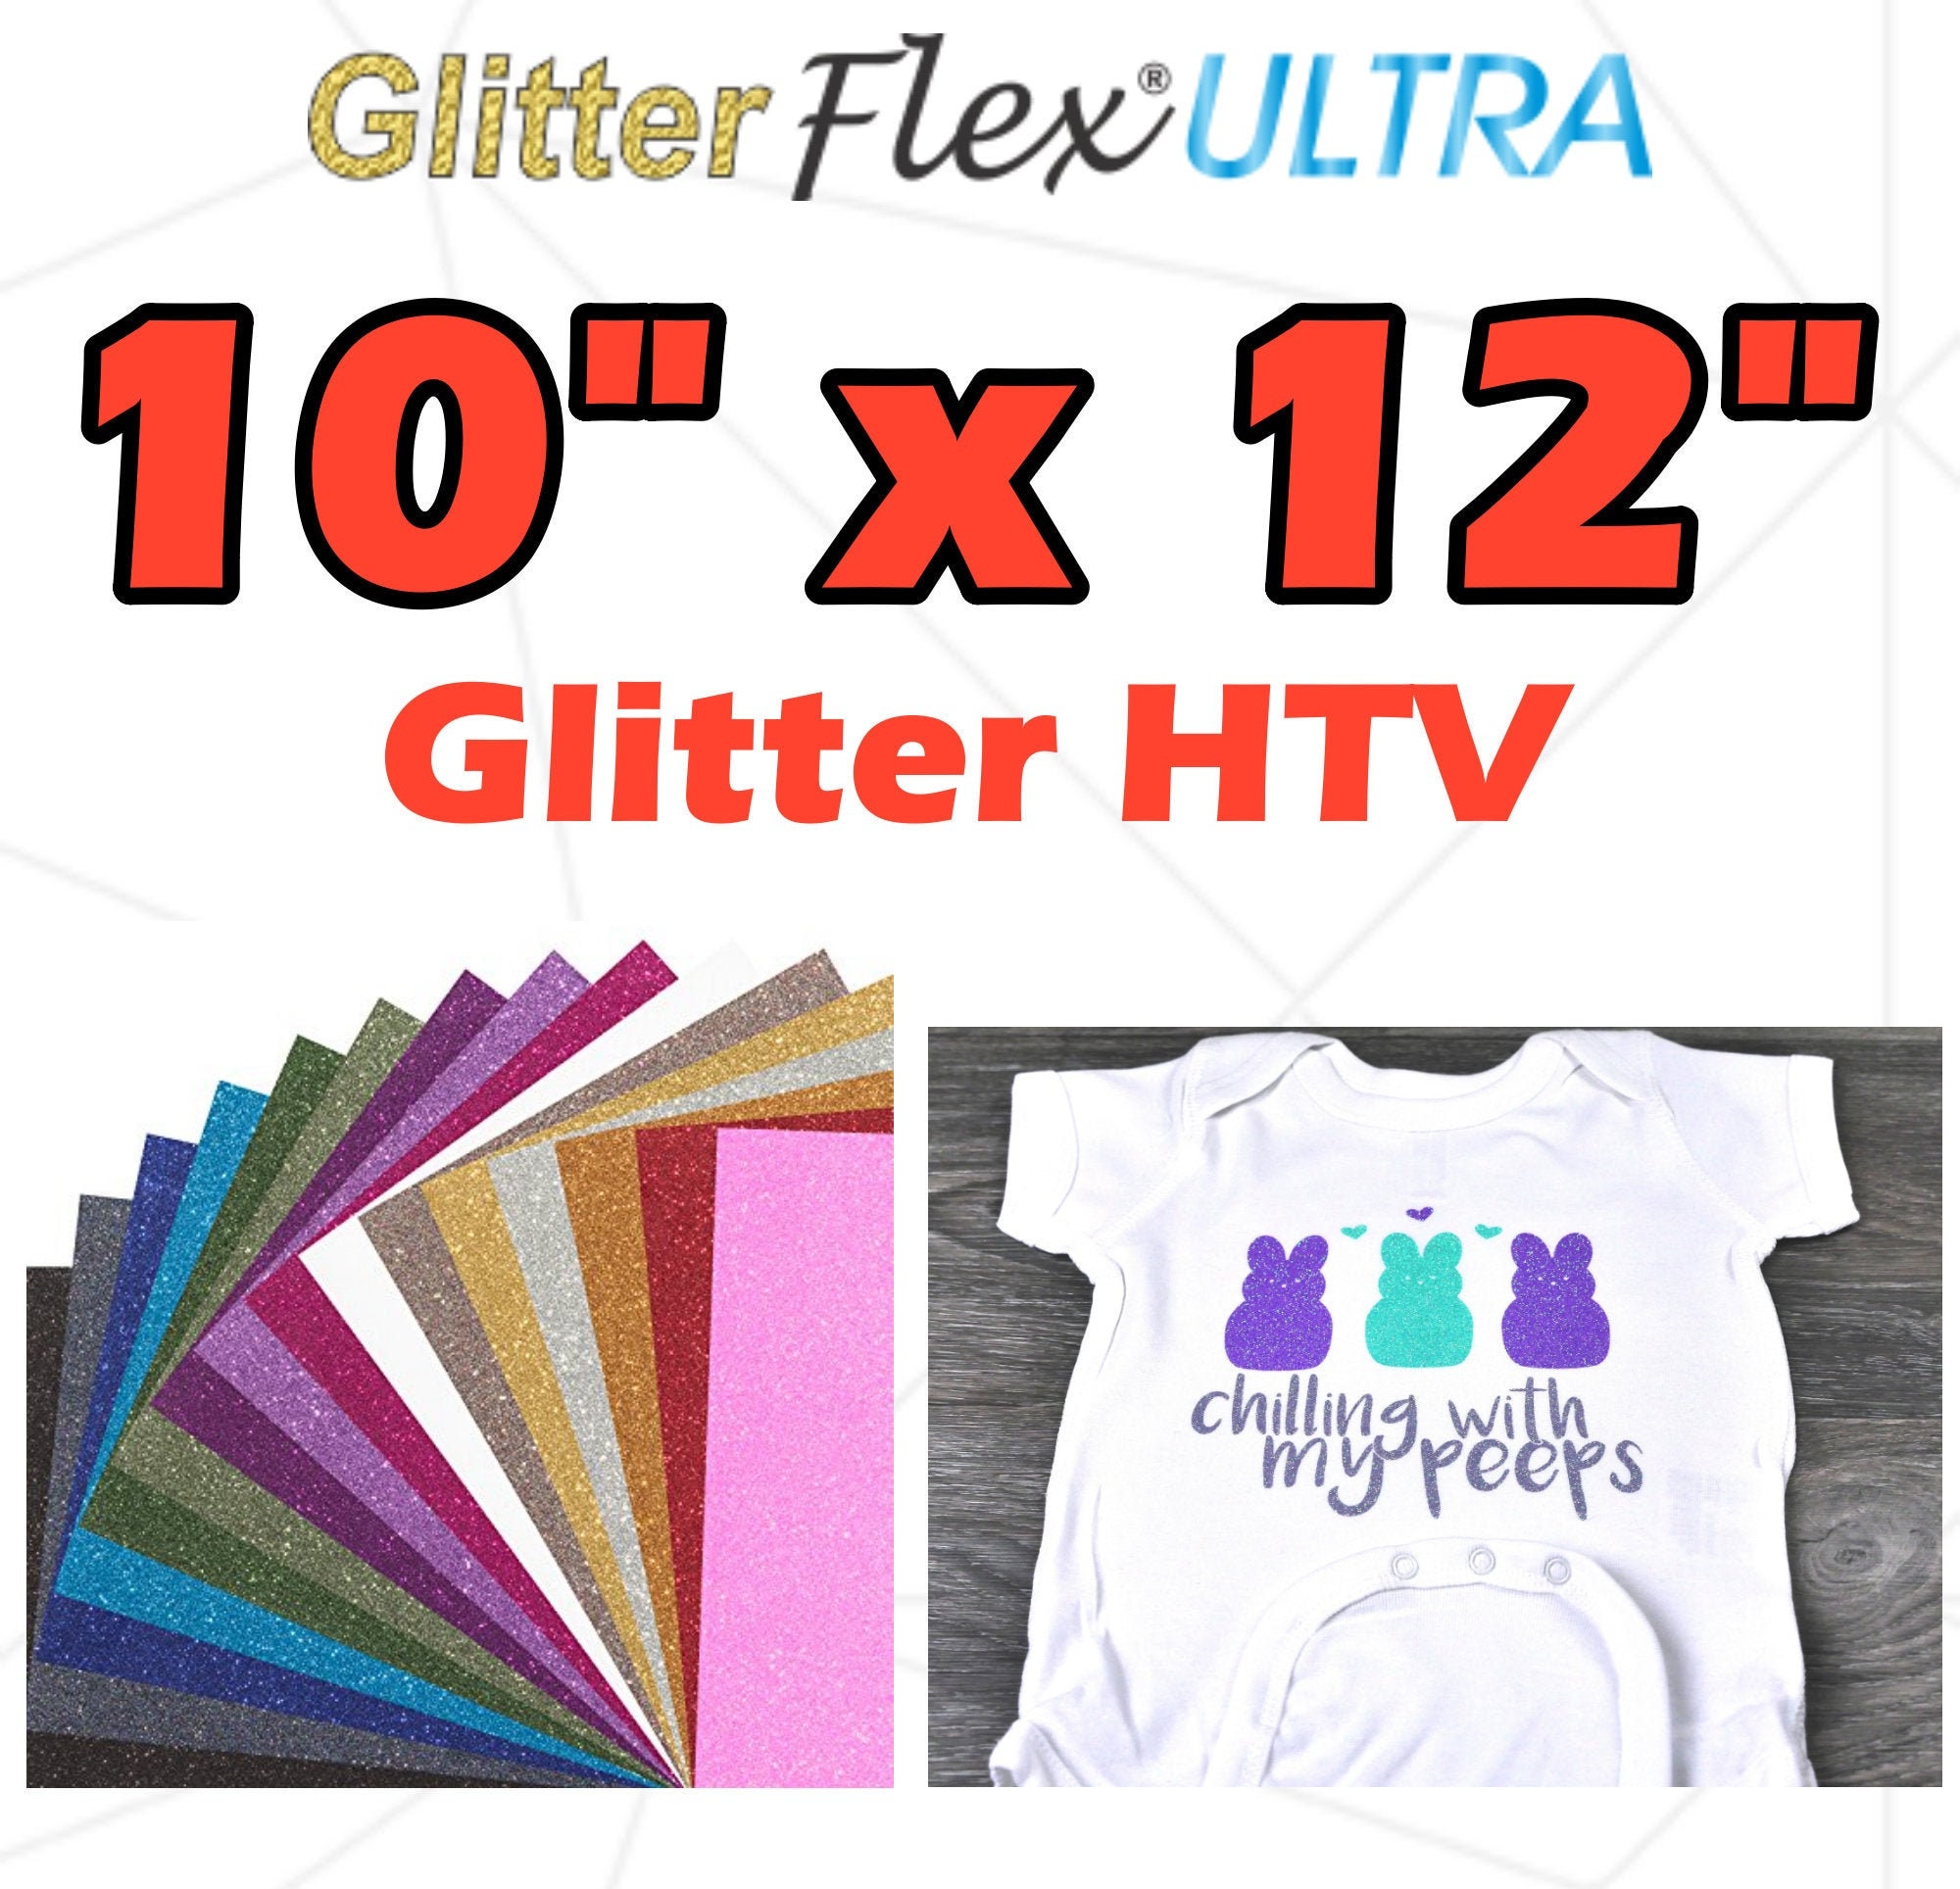 GLITTERFLEX ULTRA MAJESTIC PURPLE GLITTER HTV 20 - Direct Vinyl